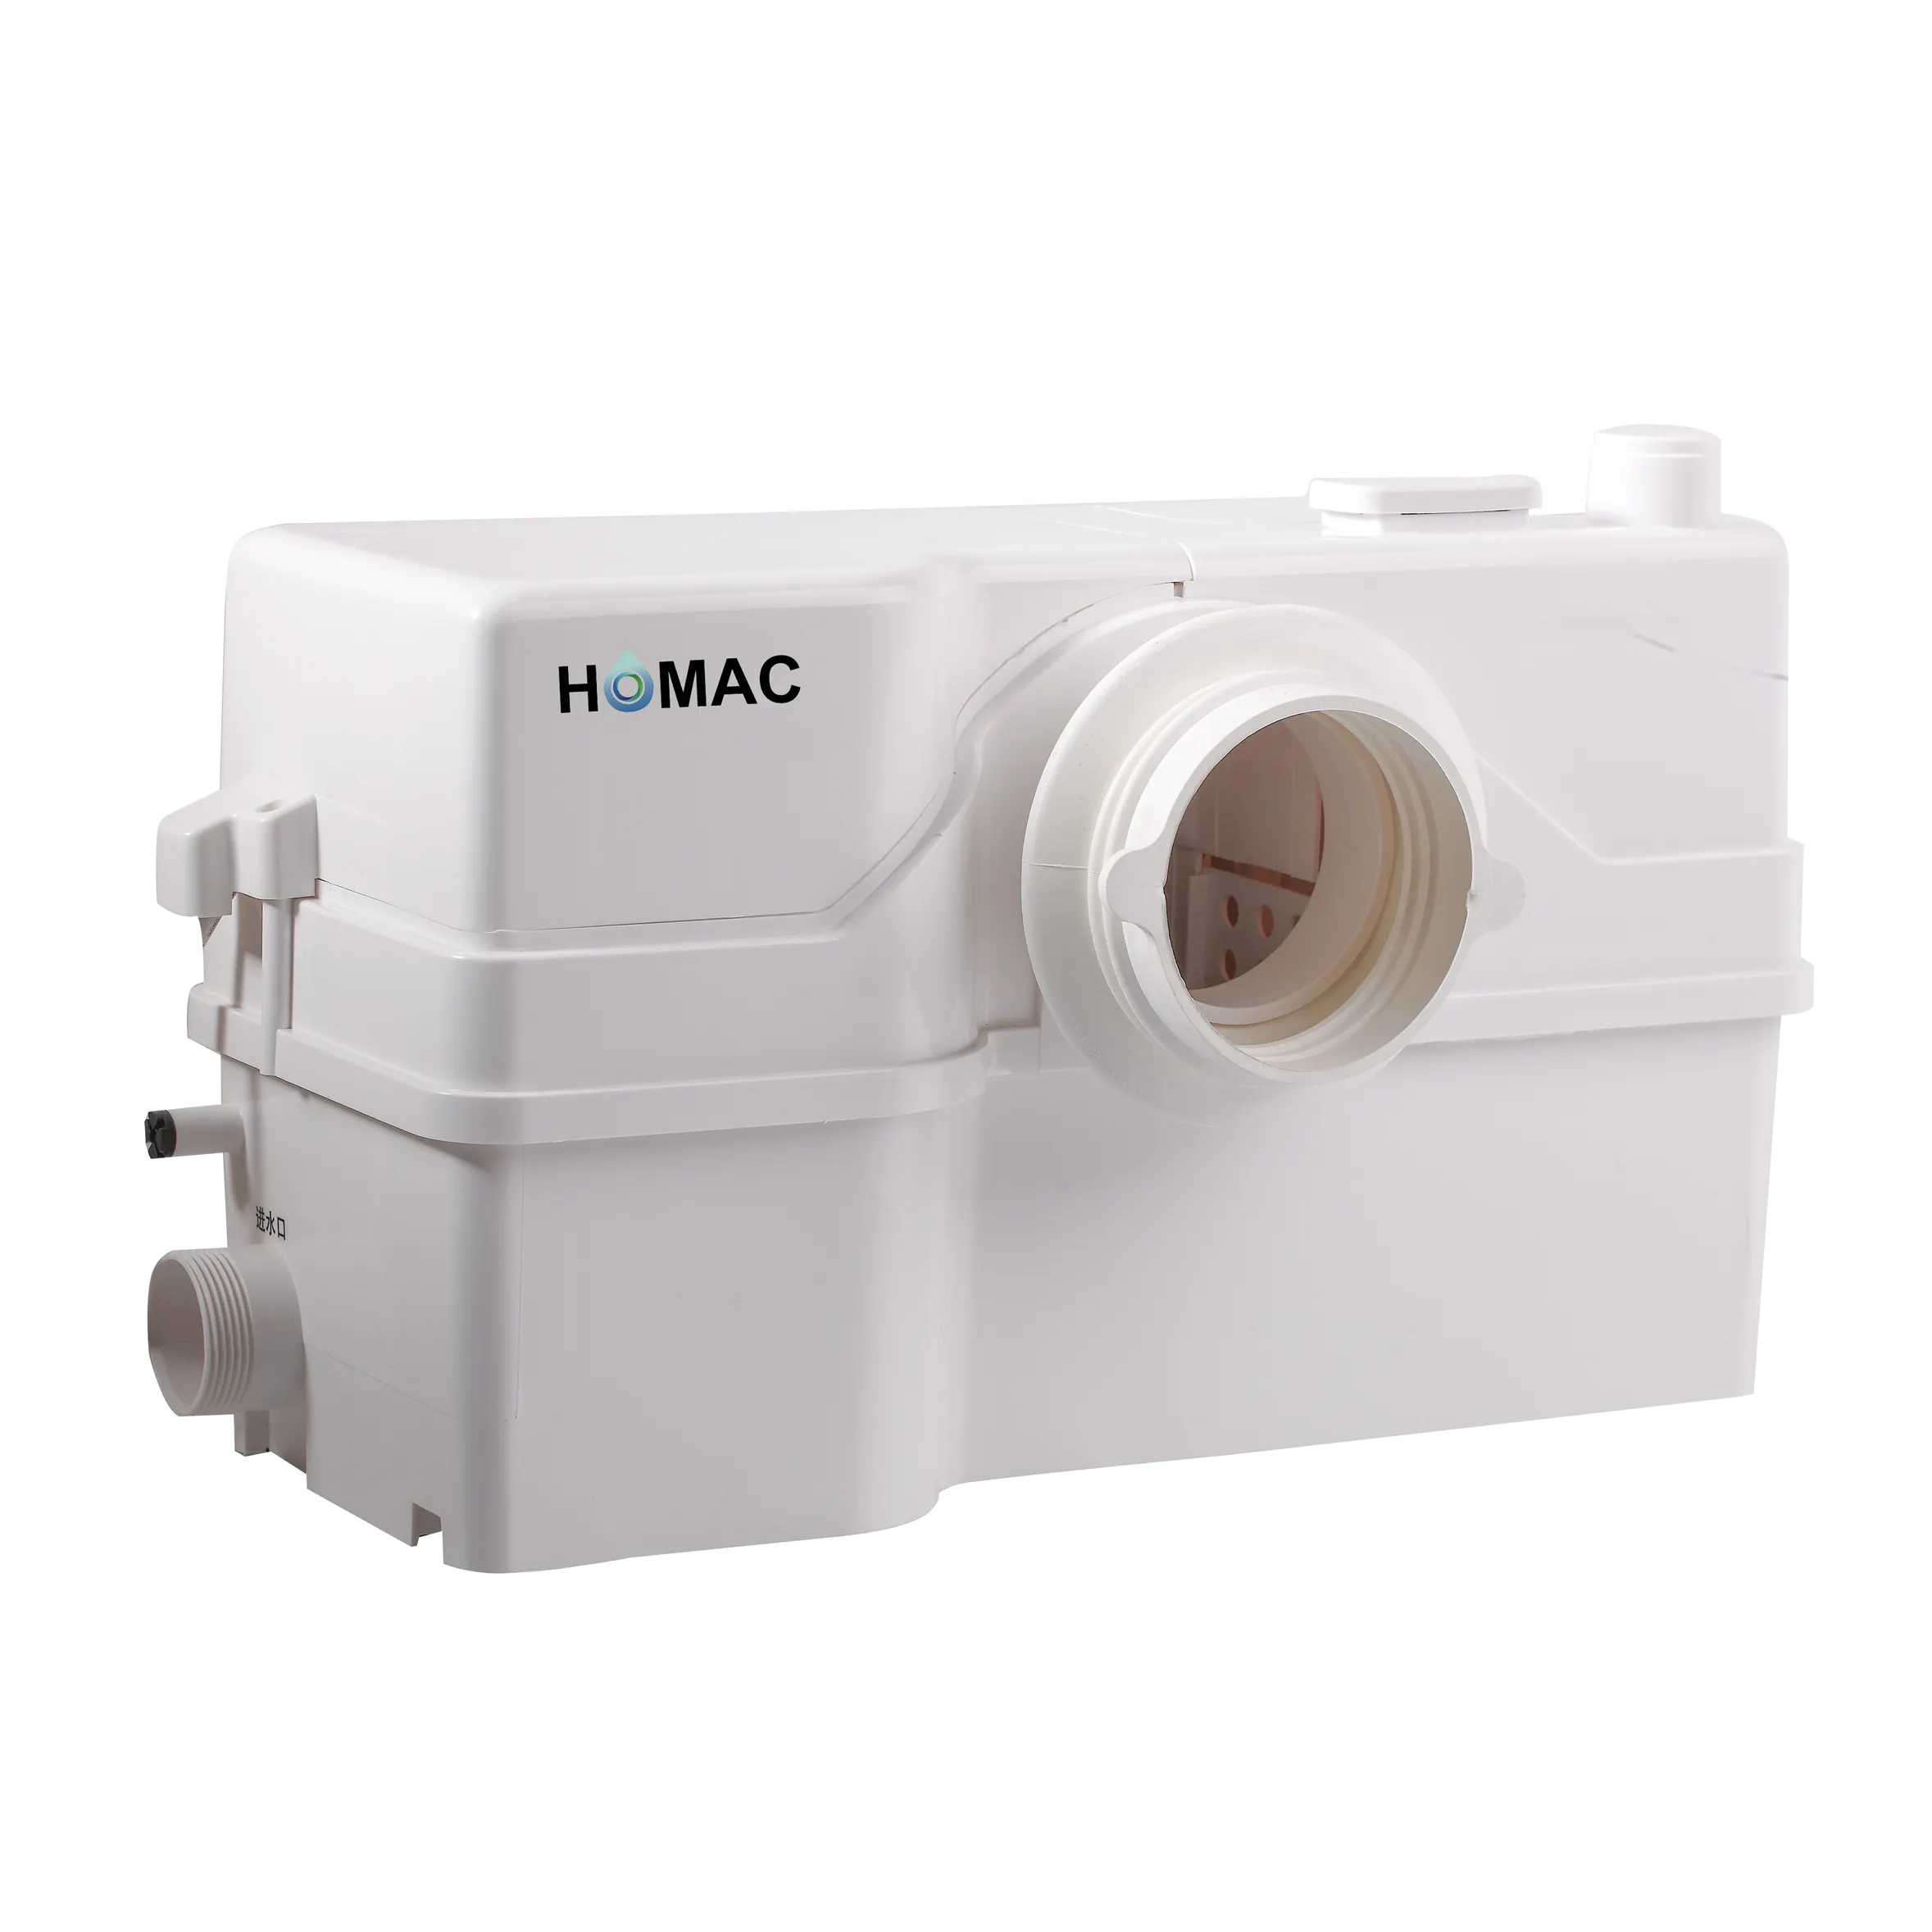 HOMAC 800 Grinder Sewage Lift Macerator Pump